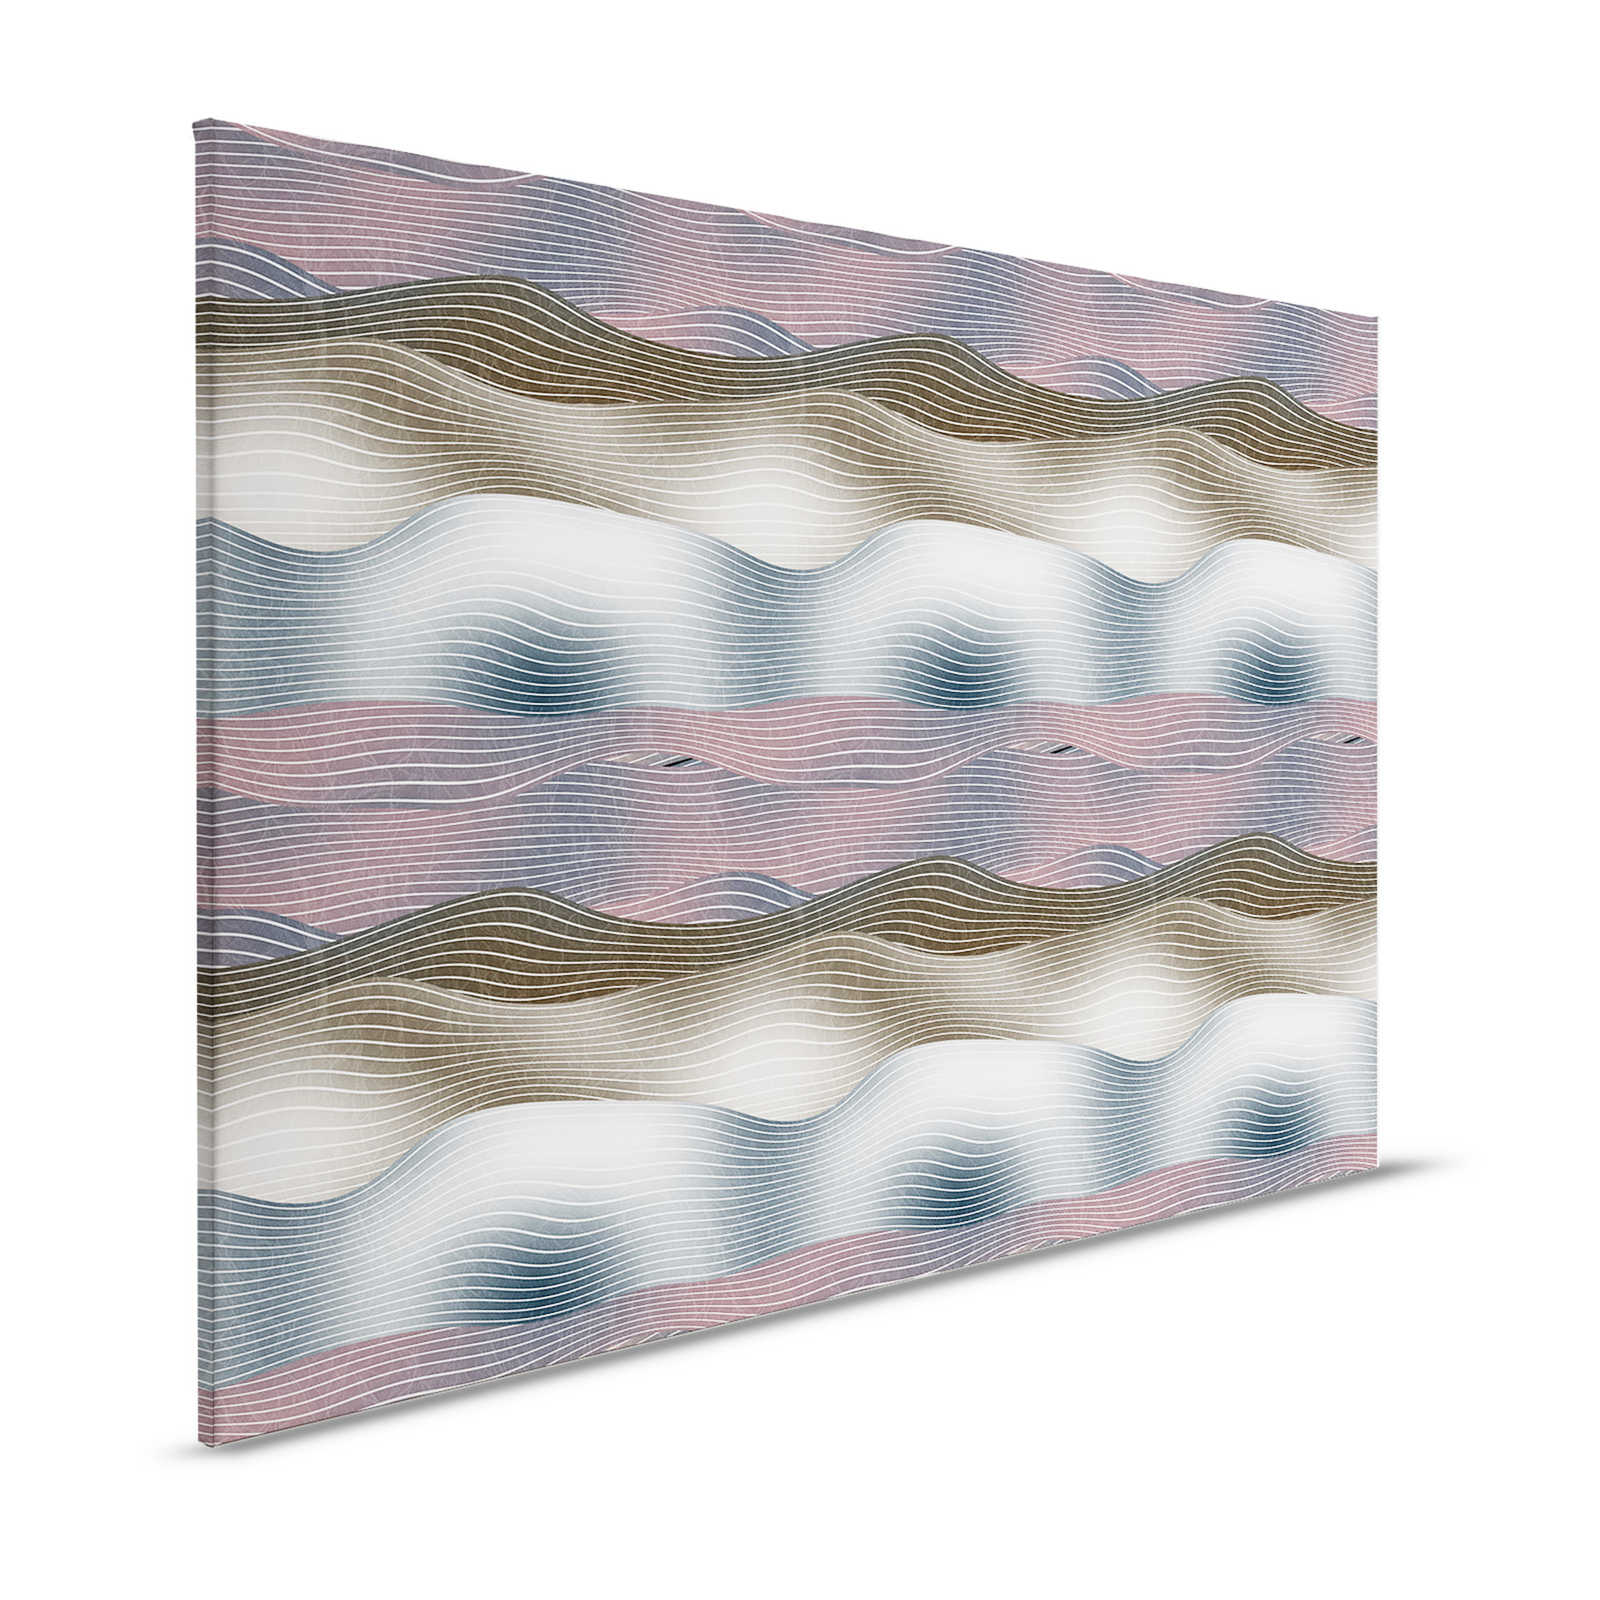 Space 2 - Retro Canvas Painting Space Design Wave Pattern - 1.20 m x 0.80 m
